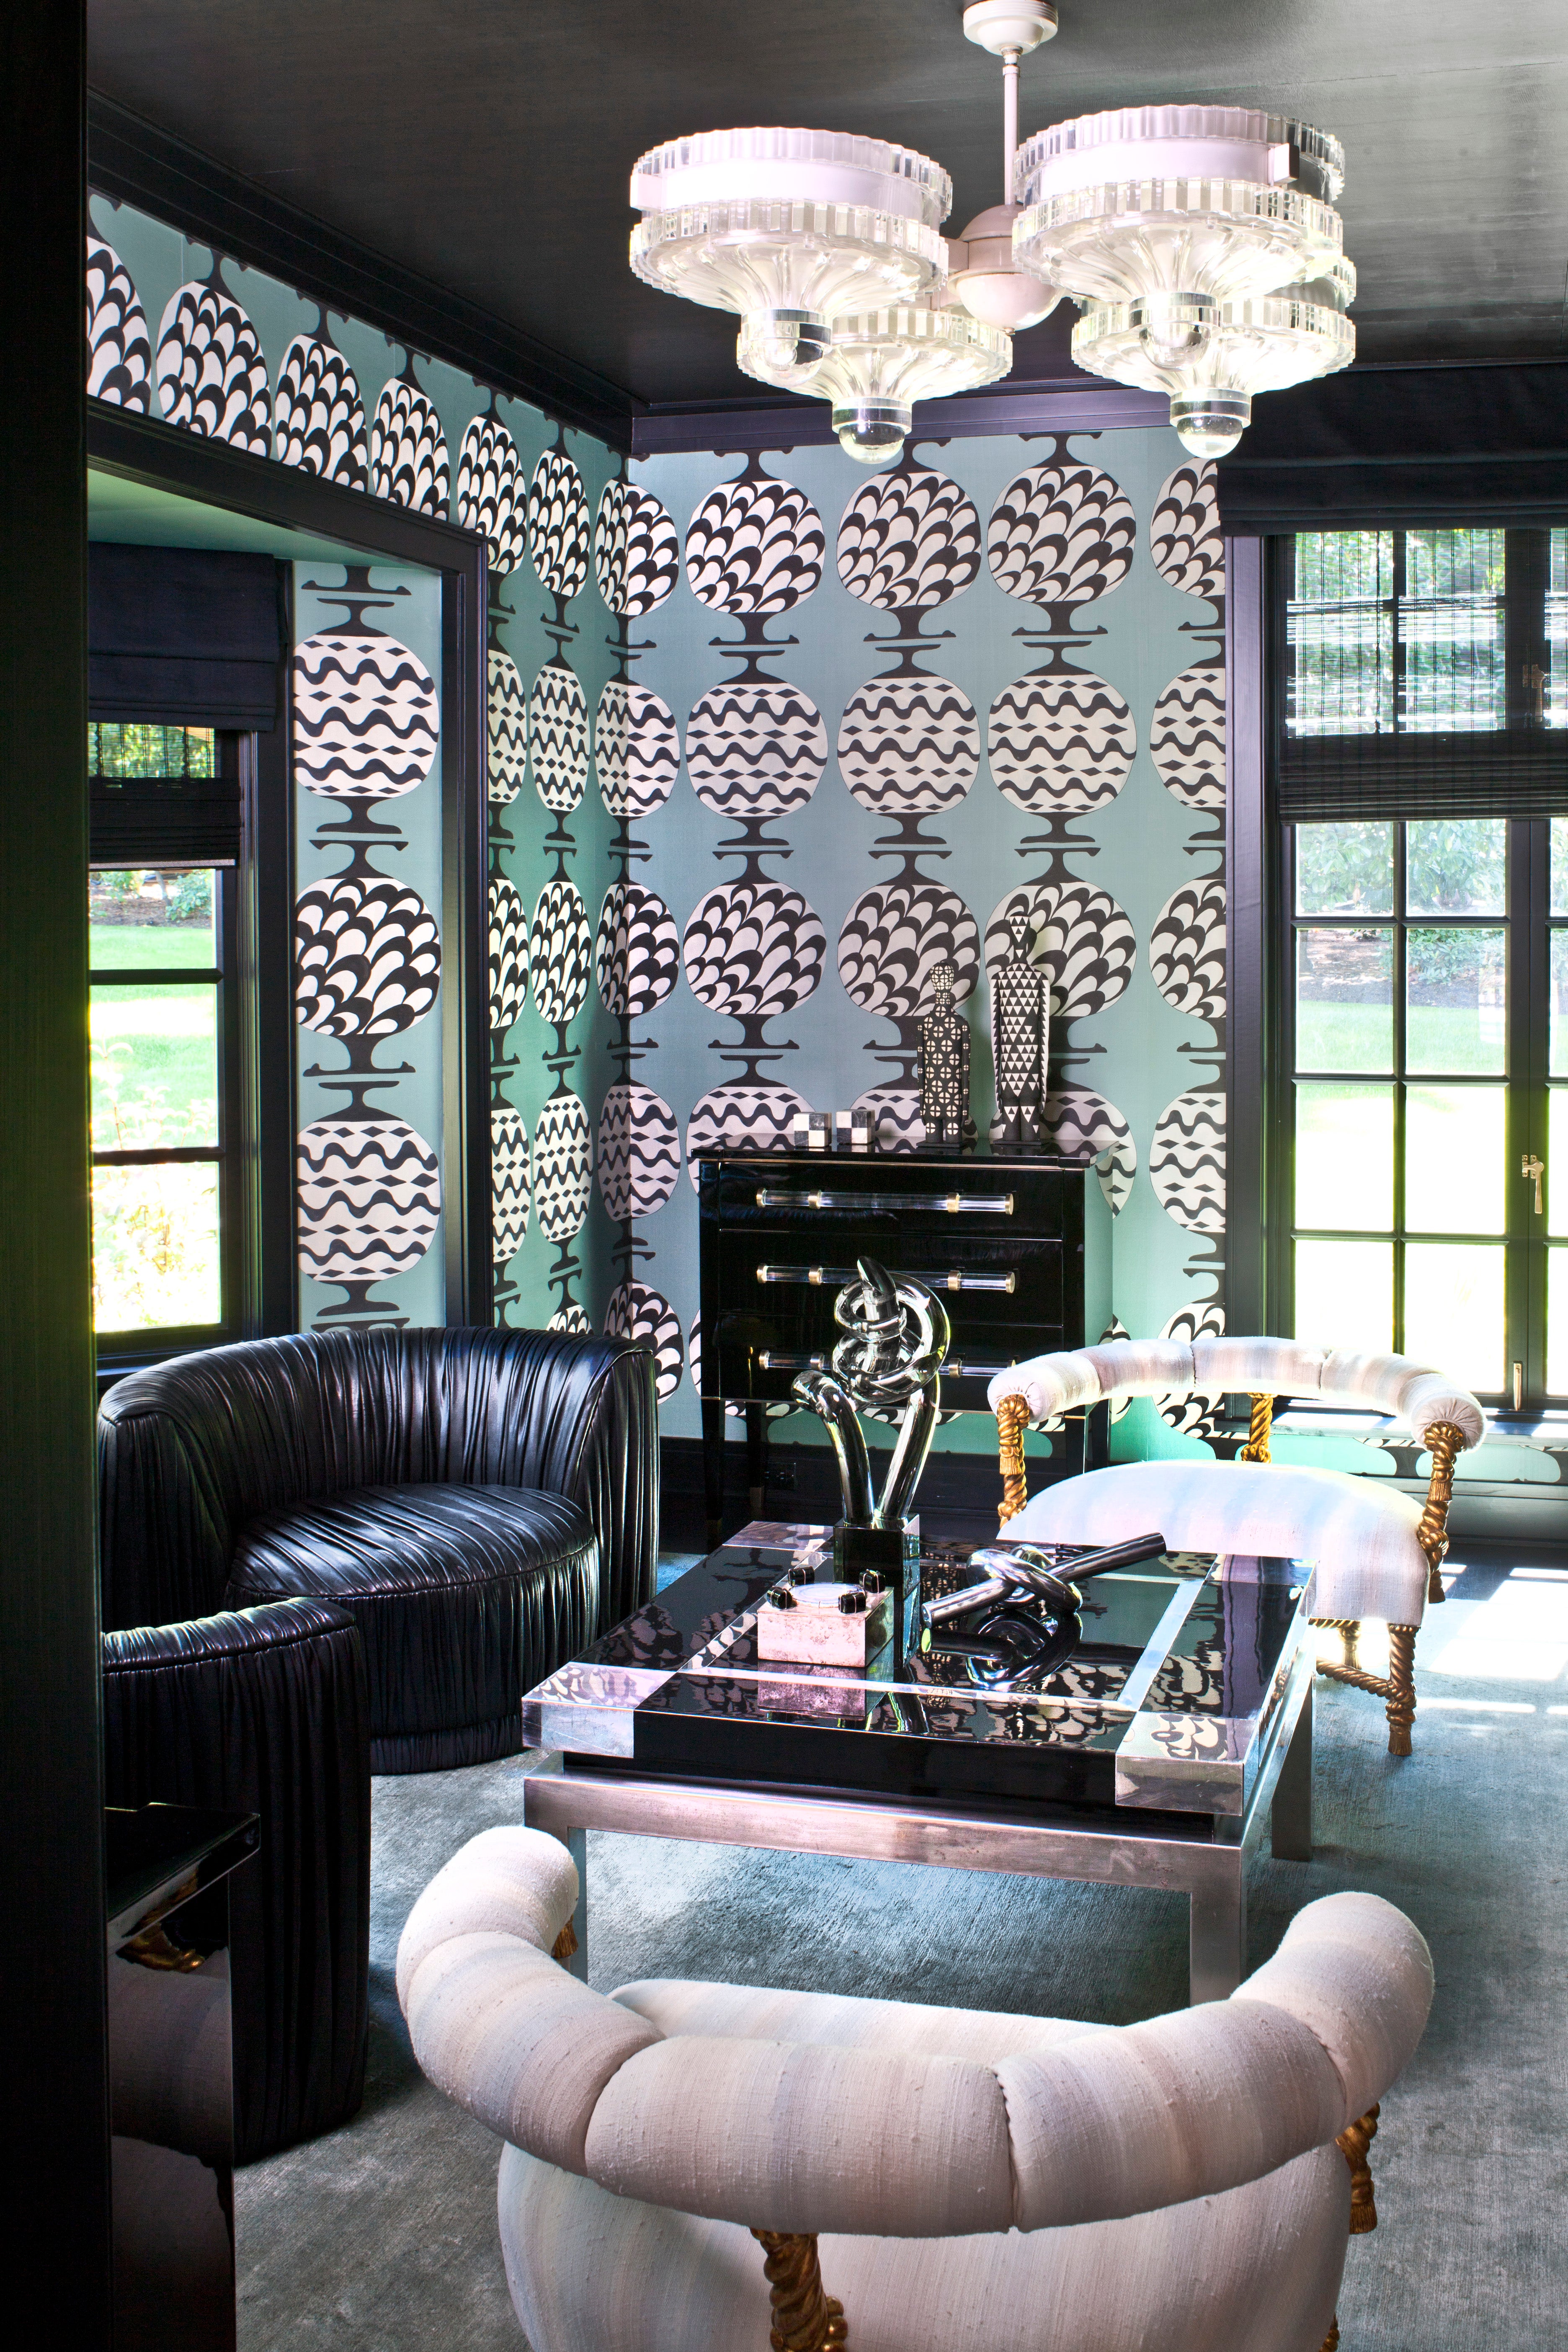 Living Room by Kelly Wearstler, Inc. on 1stdibs